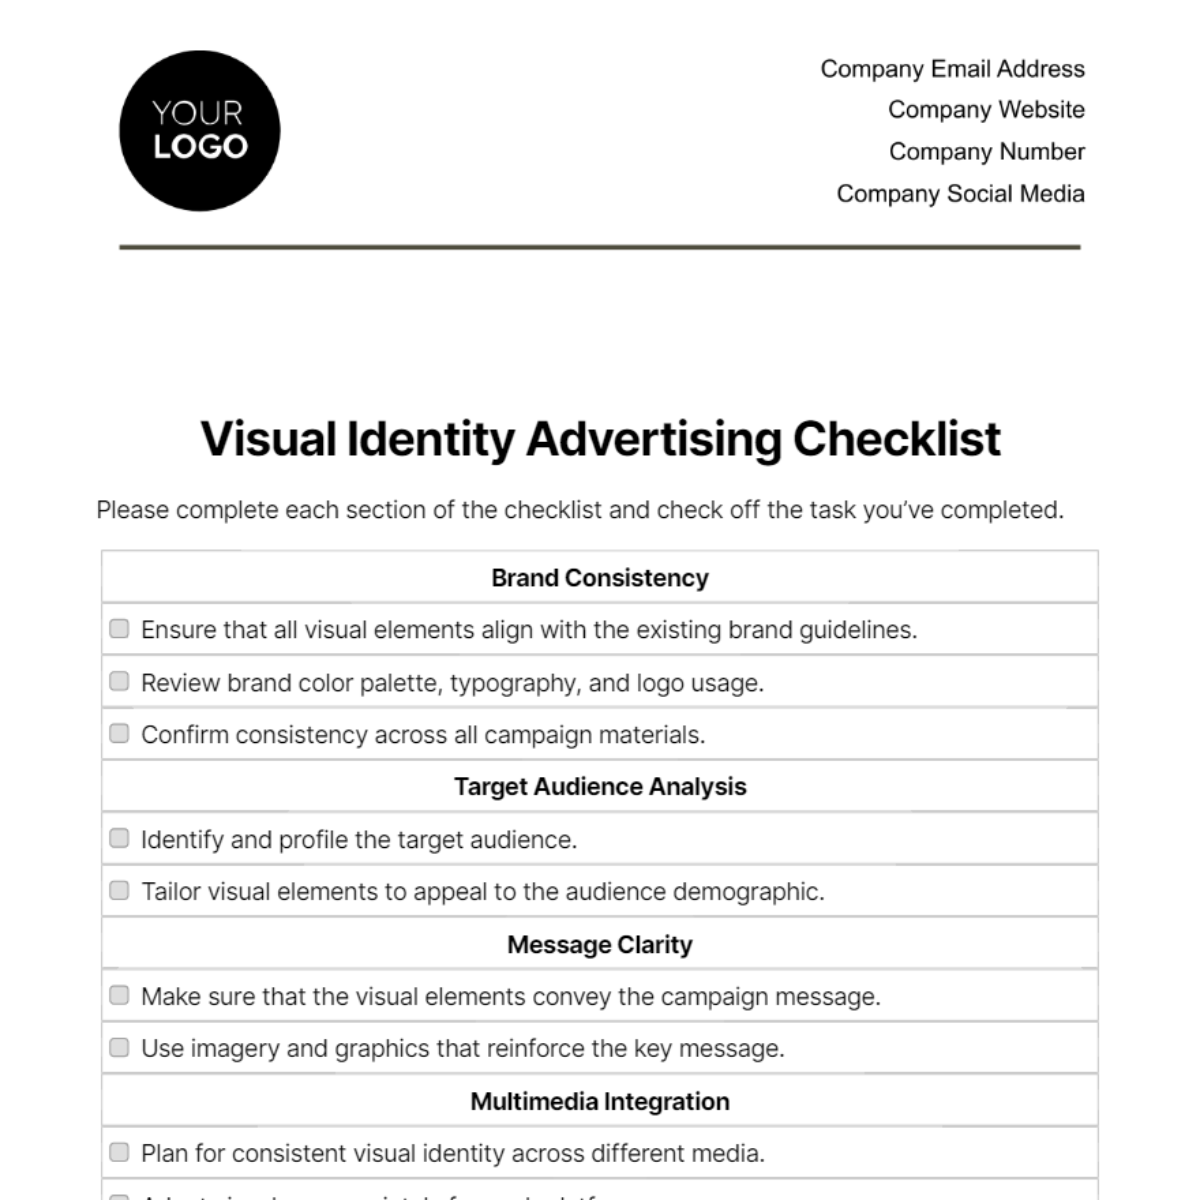 Visual Identity Advertising Checklist Template